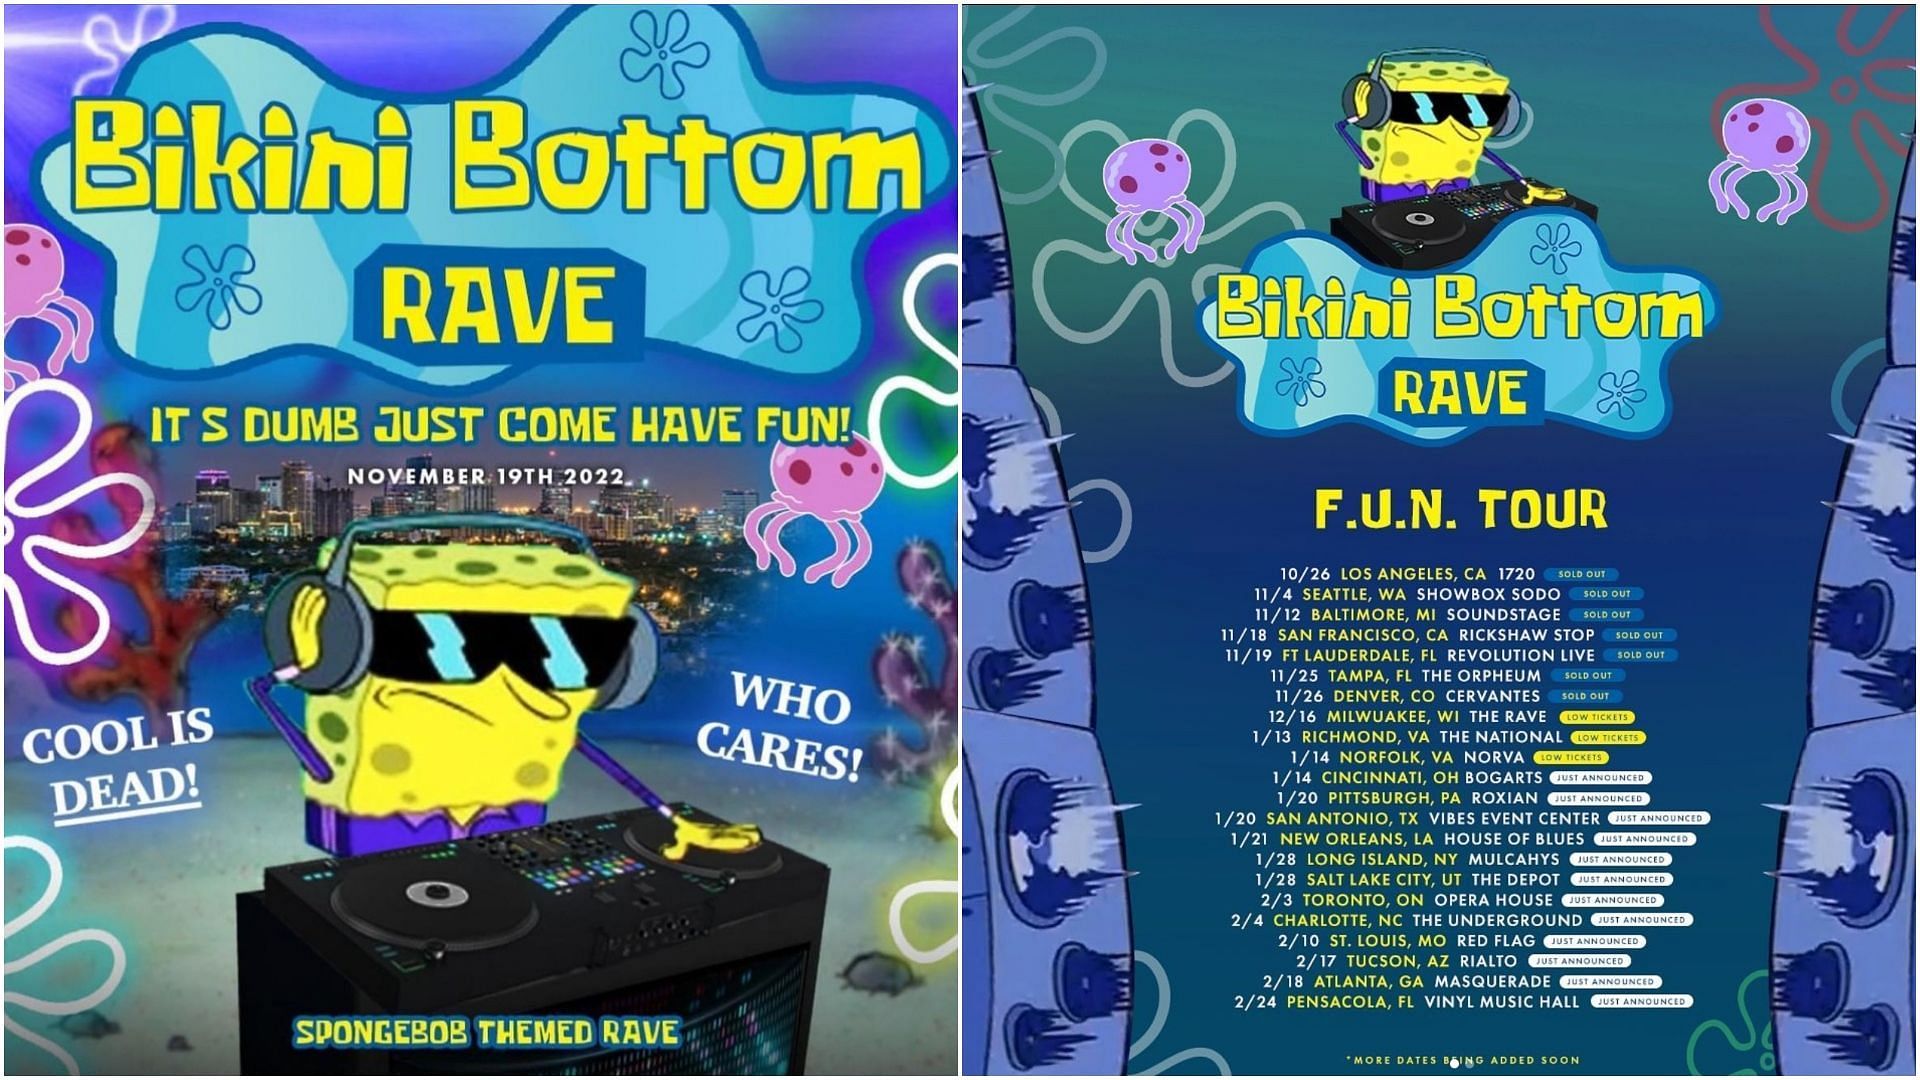 SpongeBob Bikini Bottom Rave Tour 2023 Tickets, dates, venues, and more